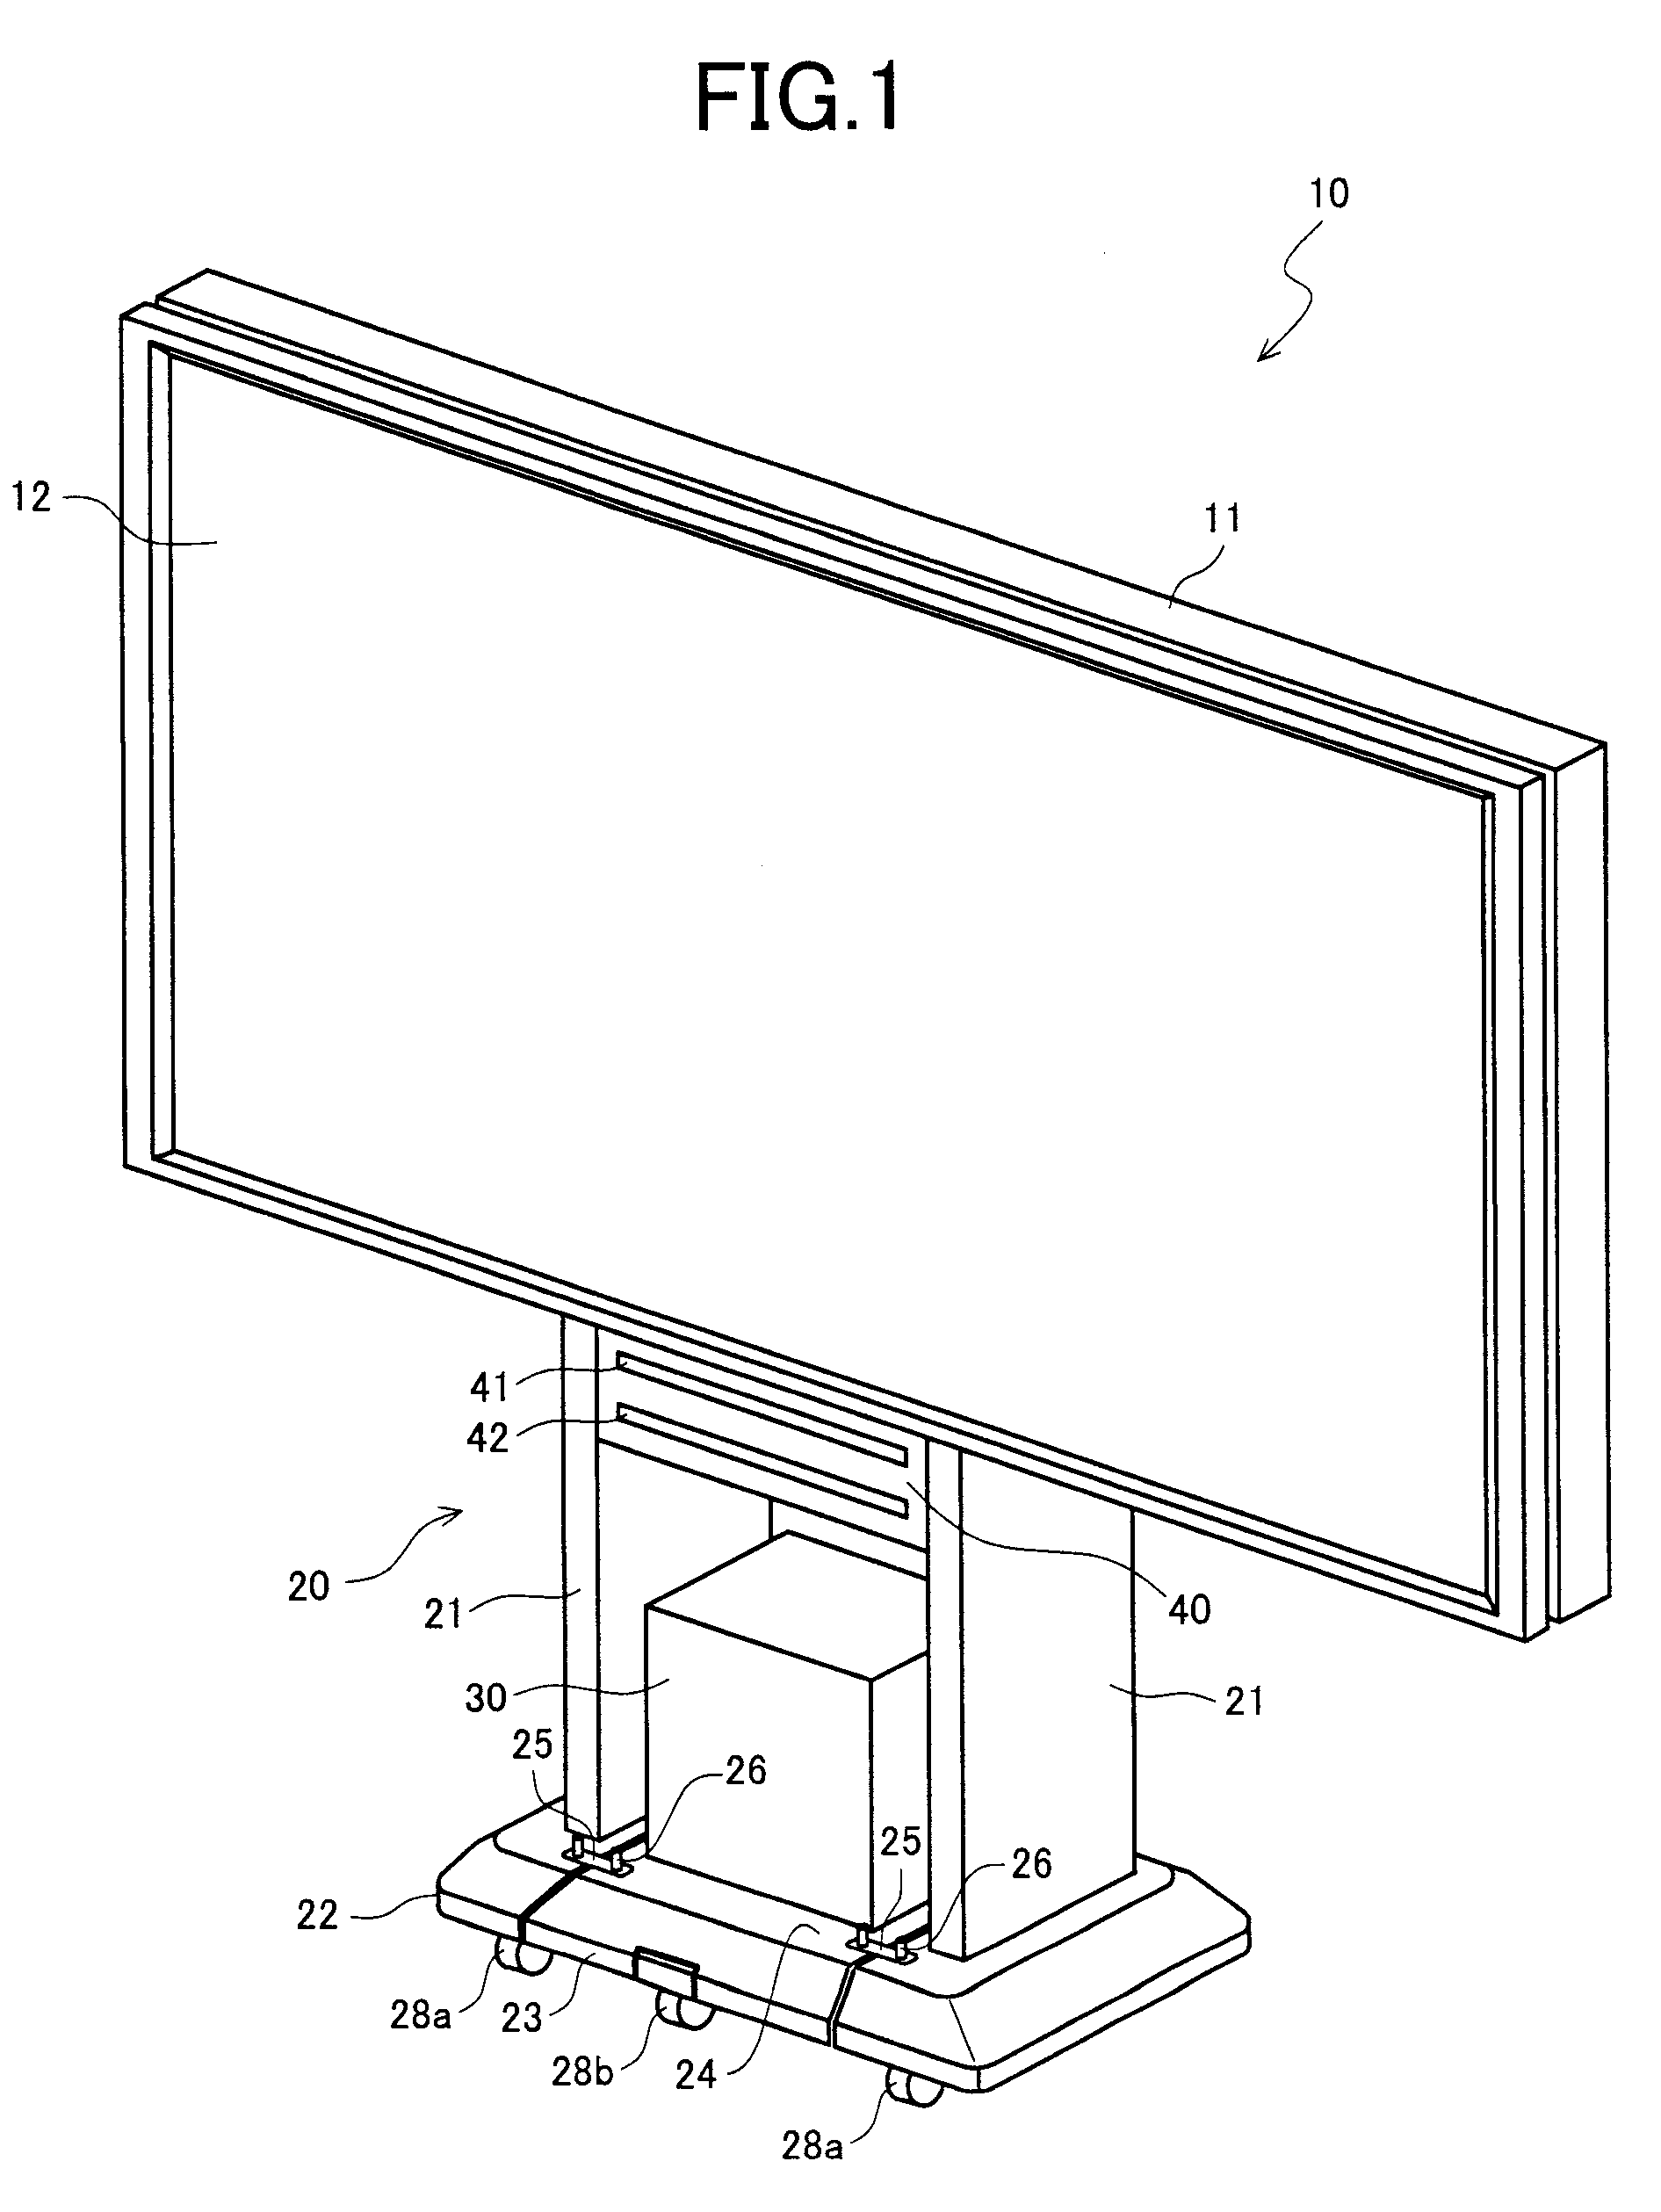 Display system